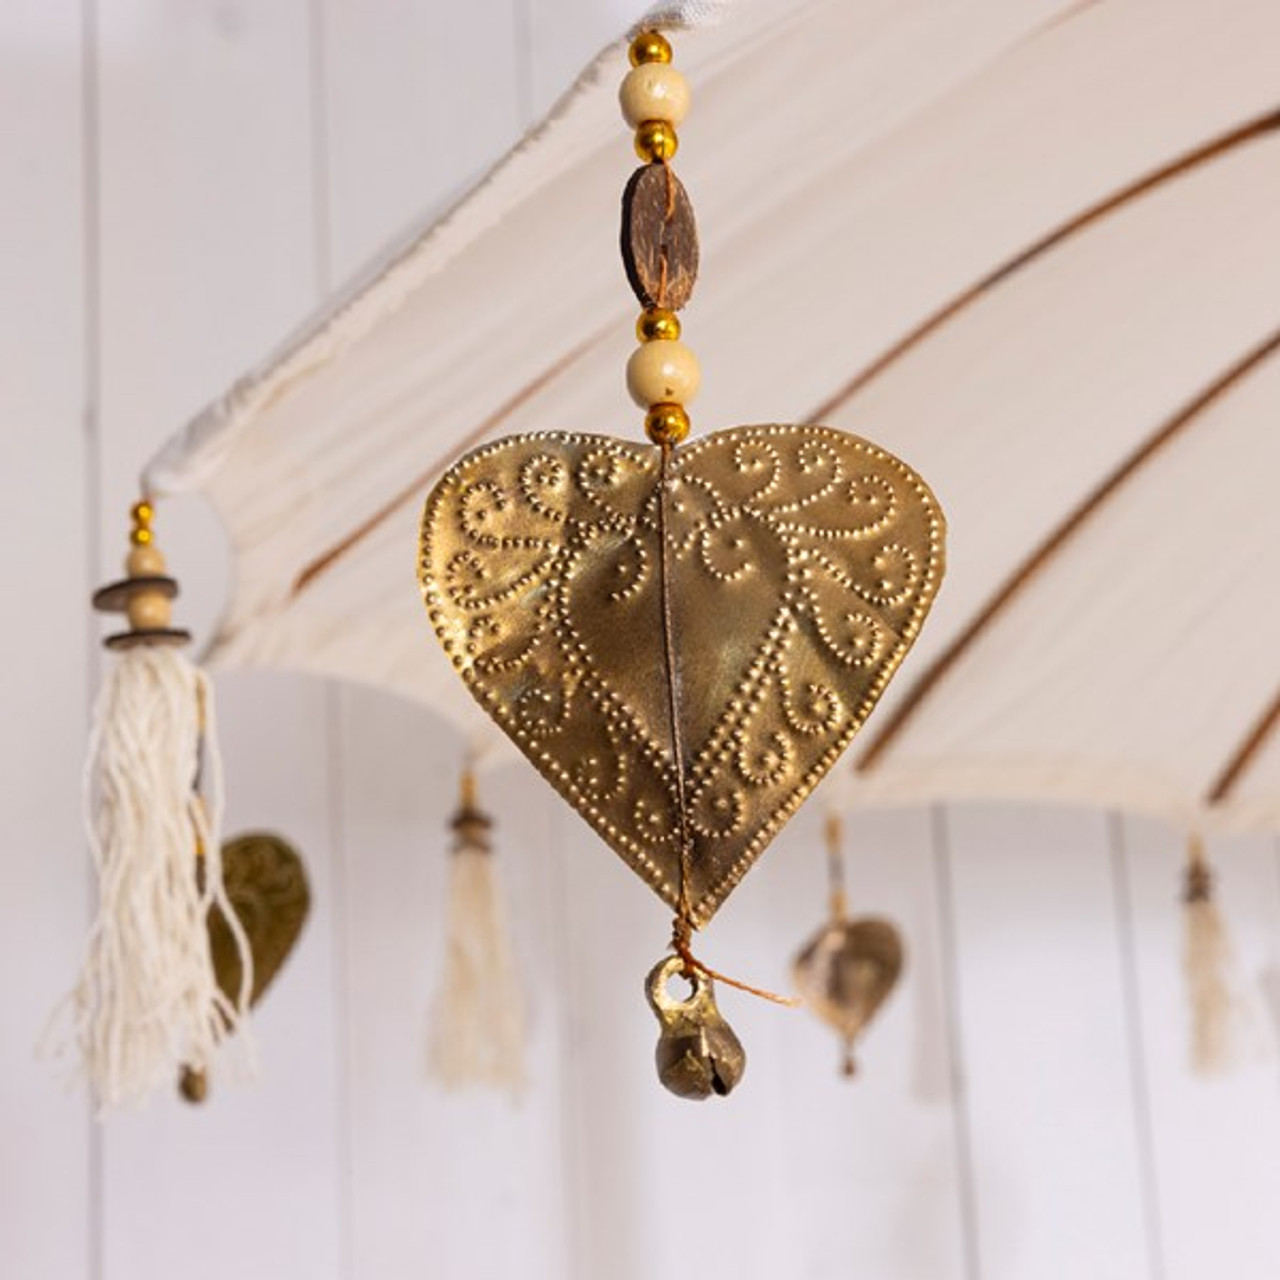 Decorative Cotton Parasol With Gold Metal Ornaments